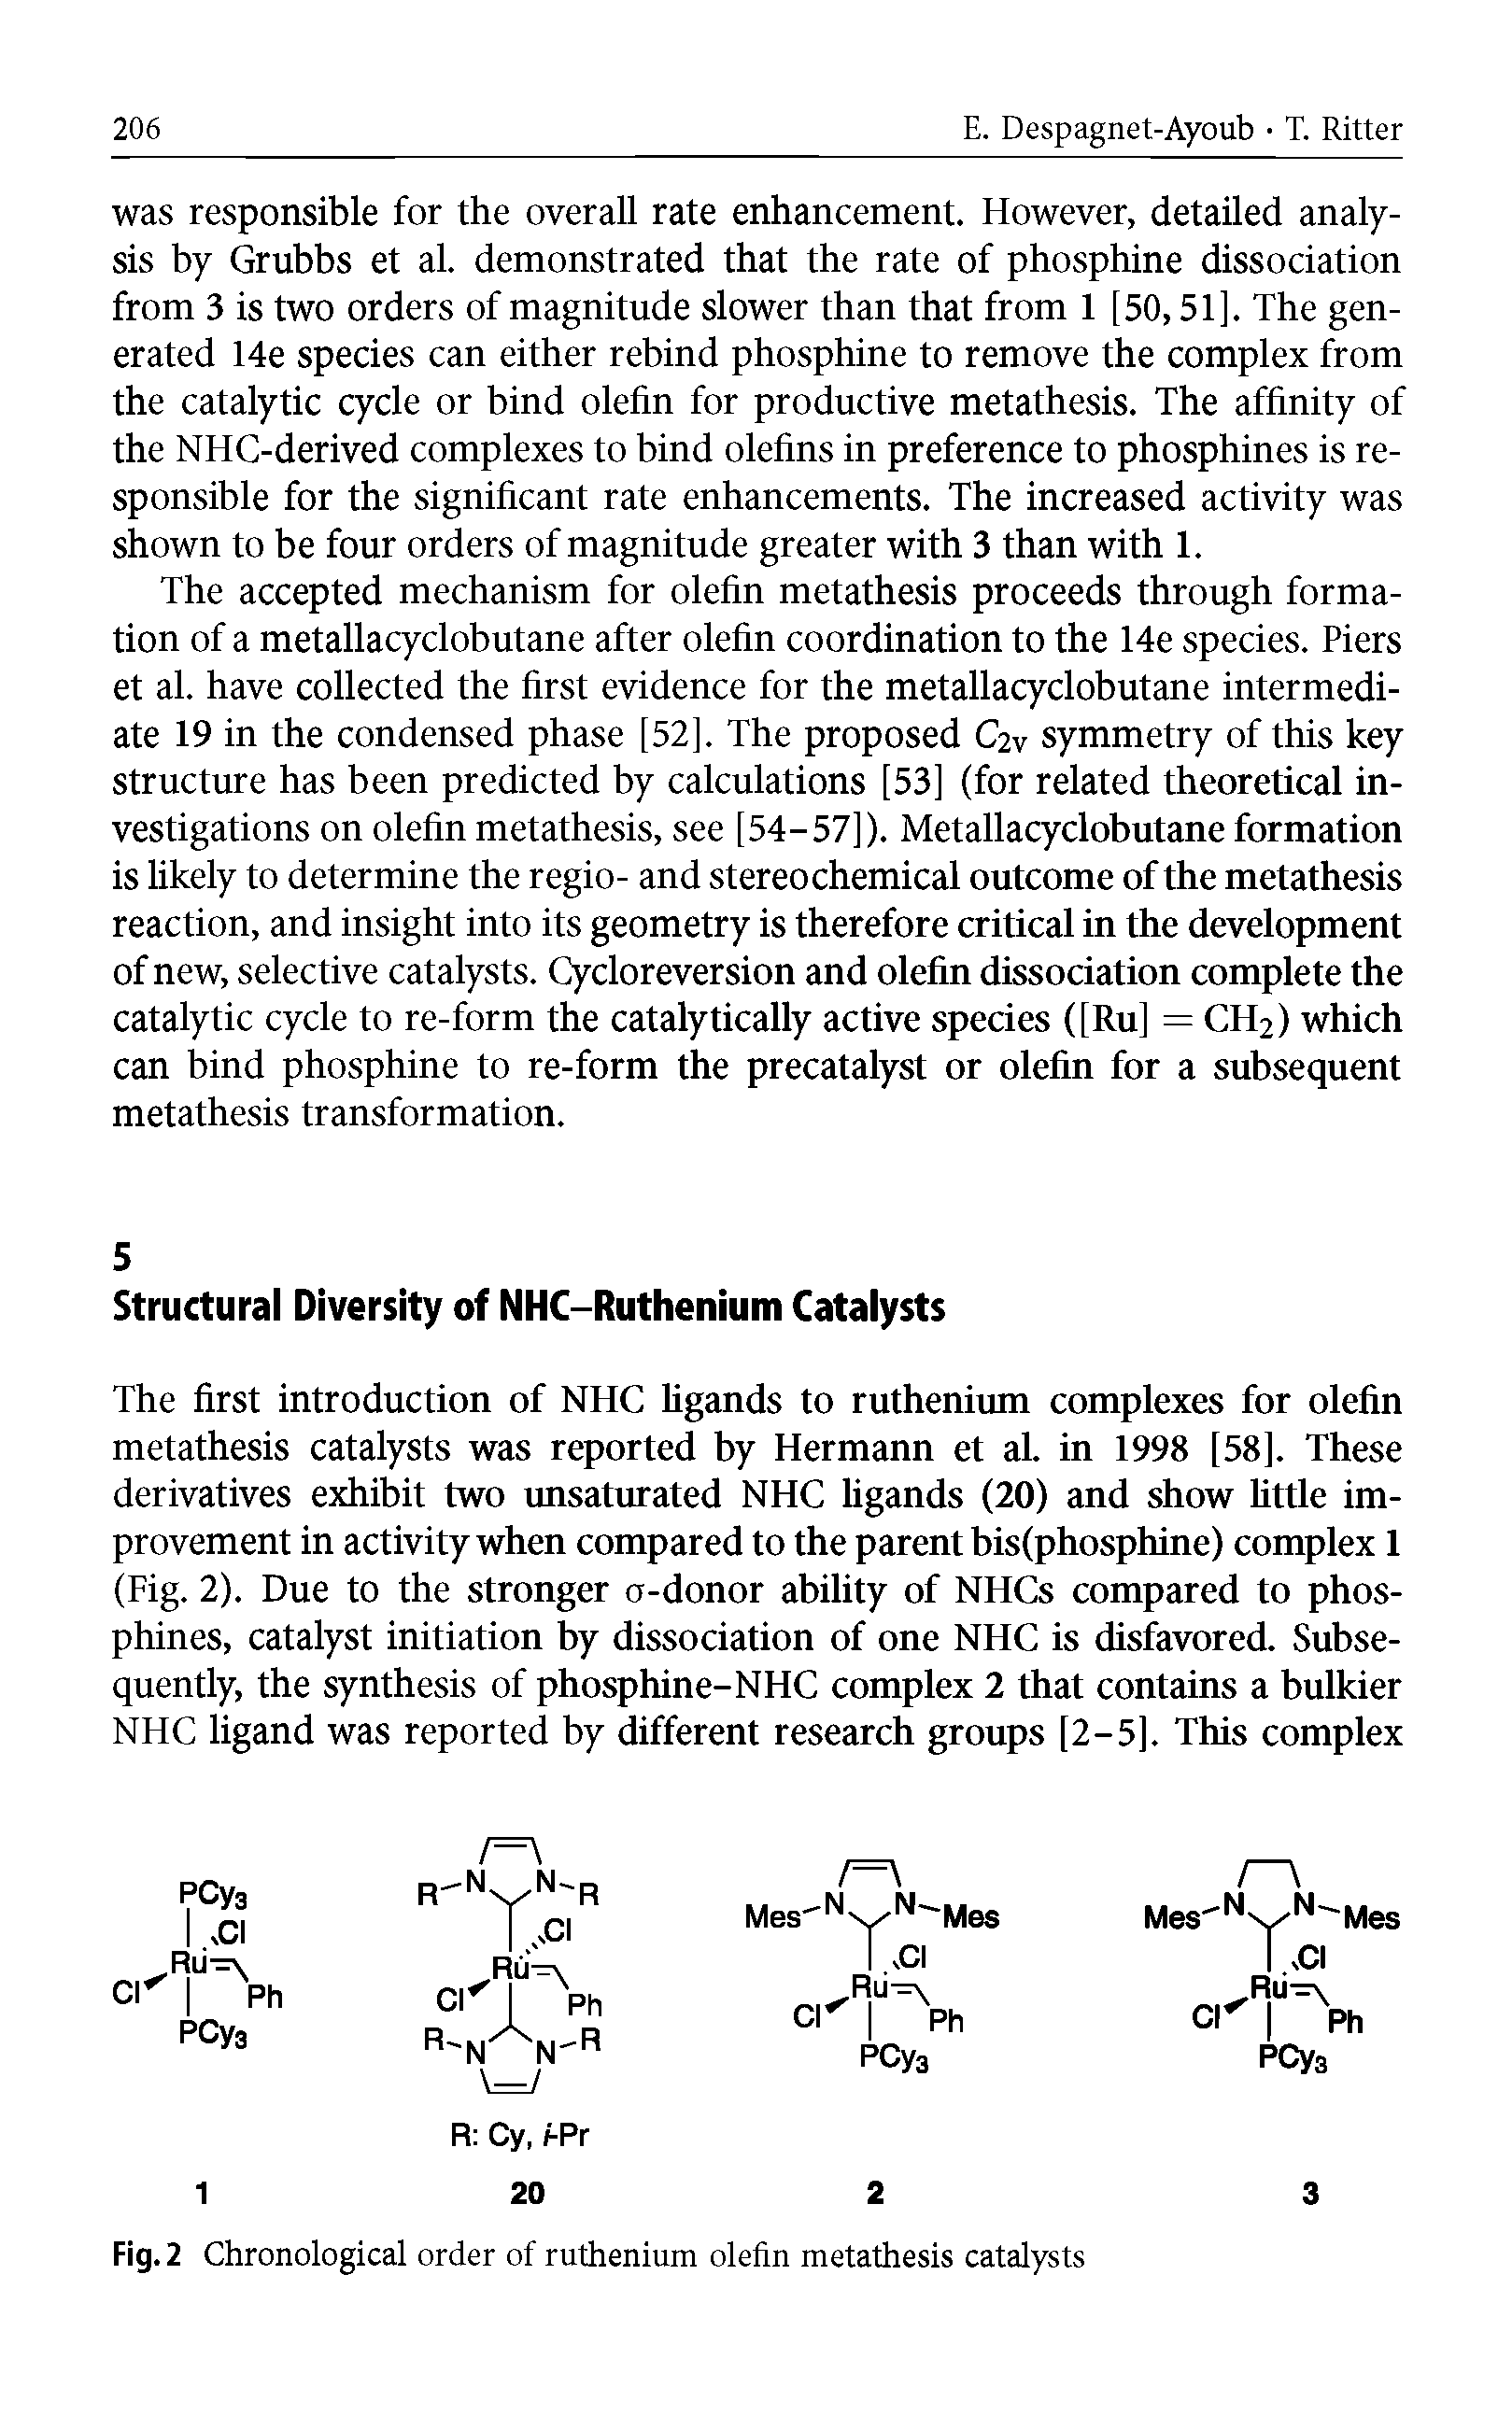 Fig. 2 Chronological order of ruthenium olefin metathesis catalysts...